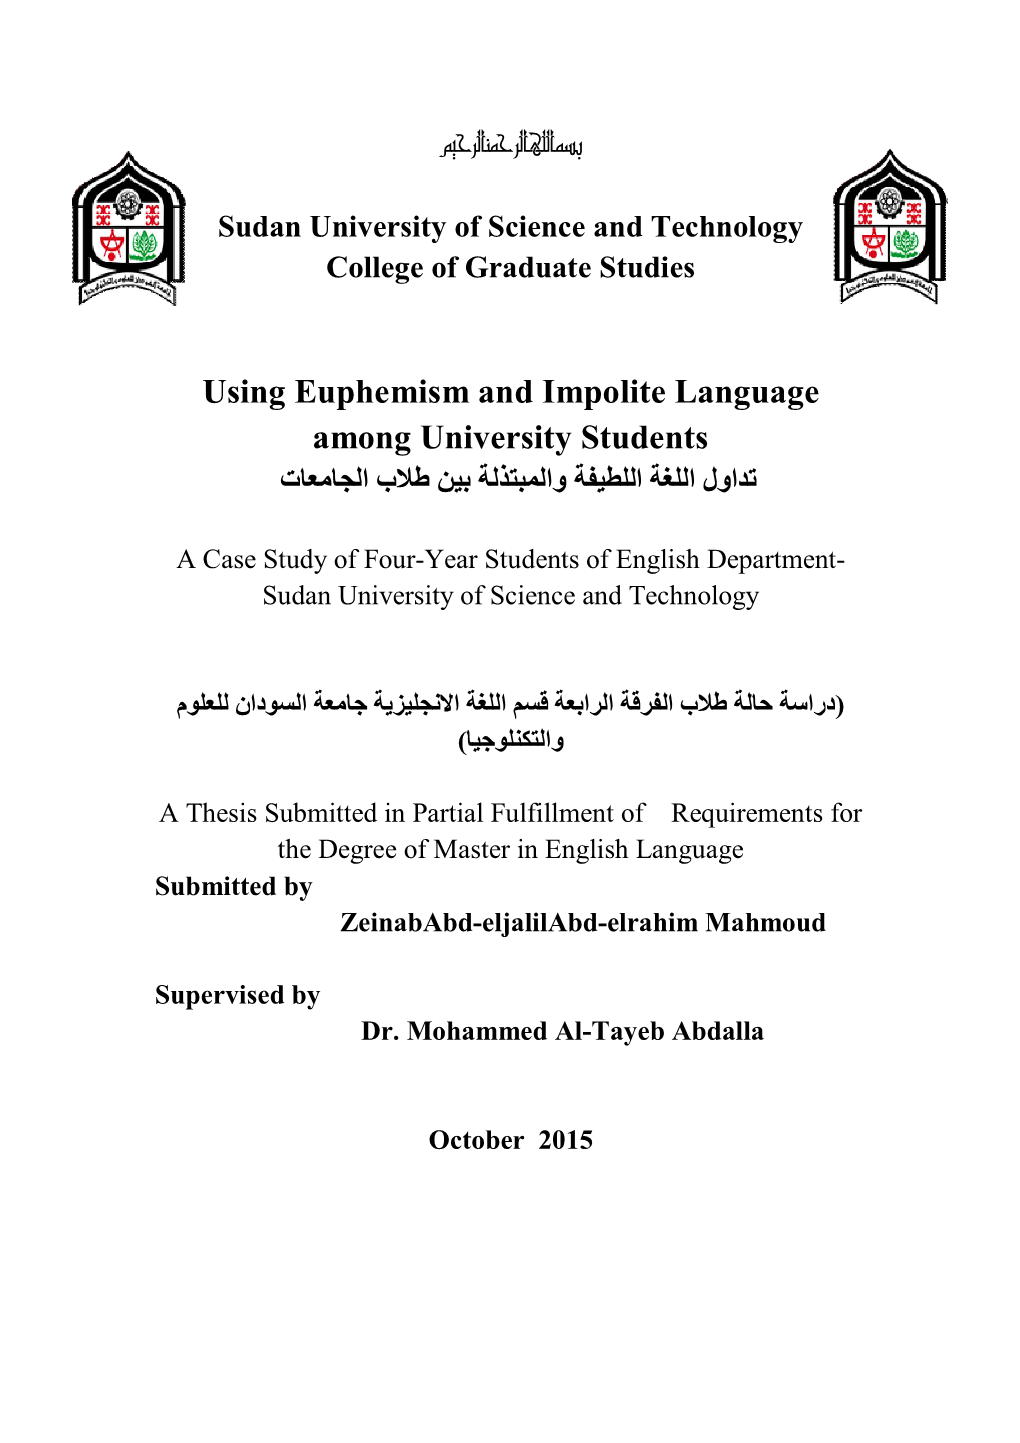 Using Euphemism and Impolite Language Among University Students ﺗﺪاول اﻟﻠﻐﺔ اﻟﻠﻄﯿﻔﺔ واﻟﻤﺒﺘﺬﻟﺔ ﺑﯿﻦ طﻼب اﻟﺠﺎﻣﻌﺎت